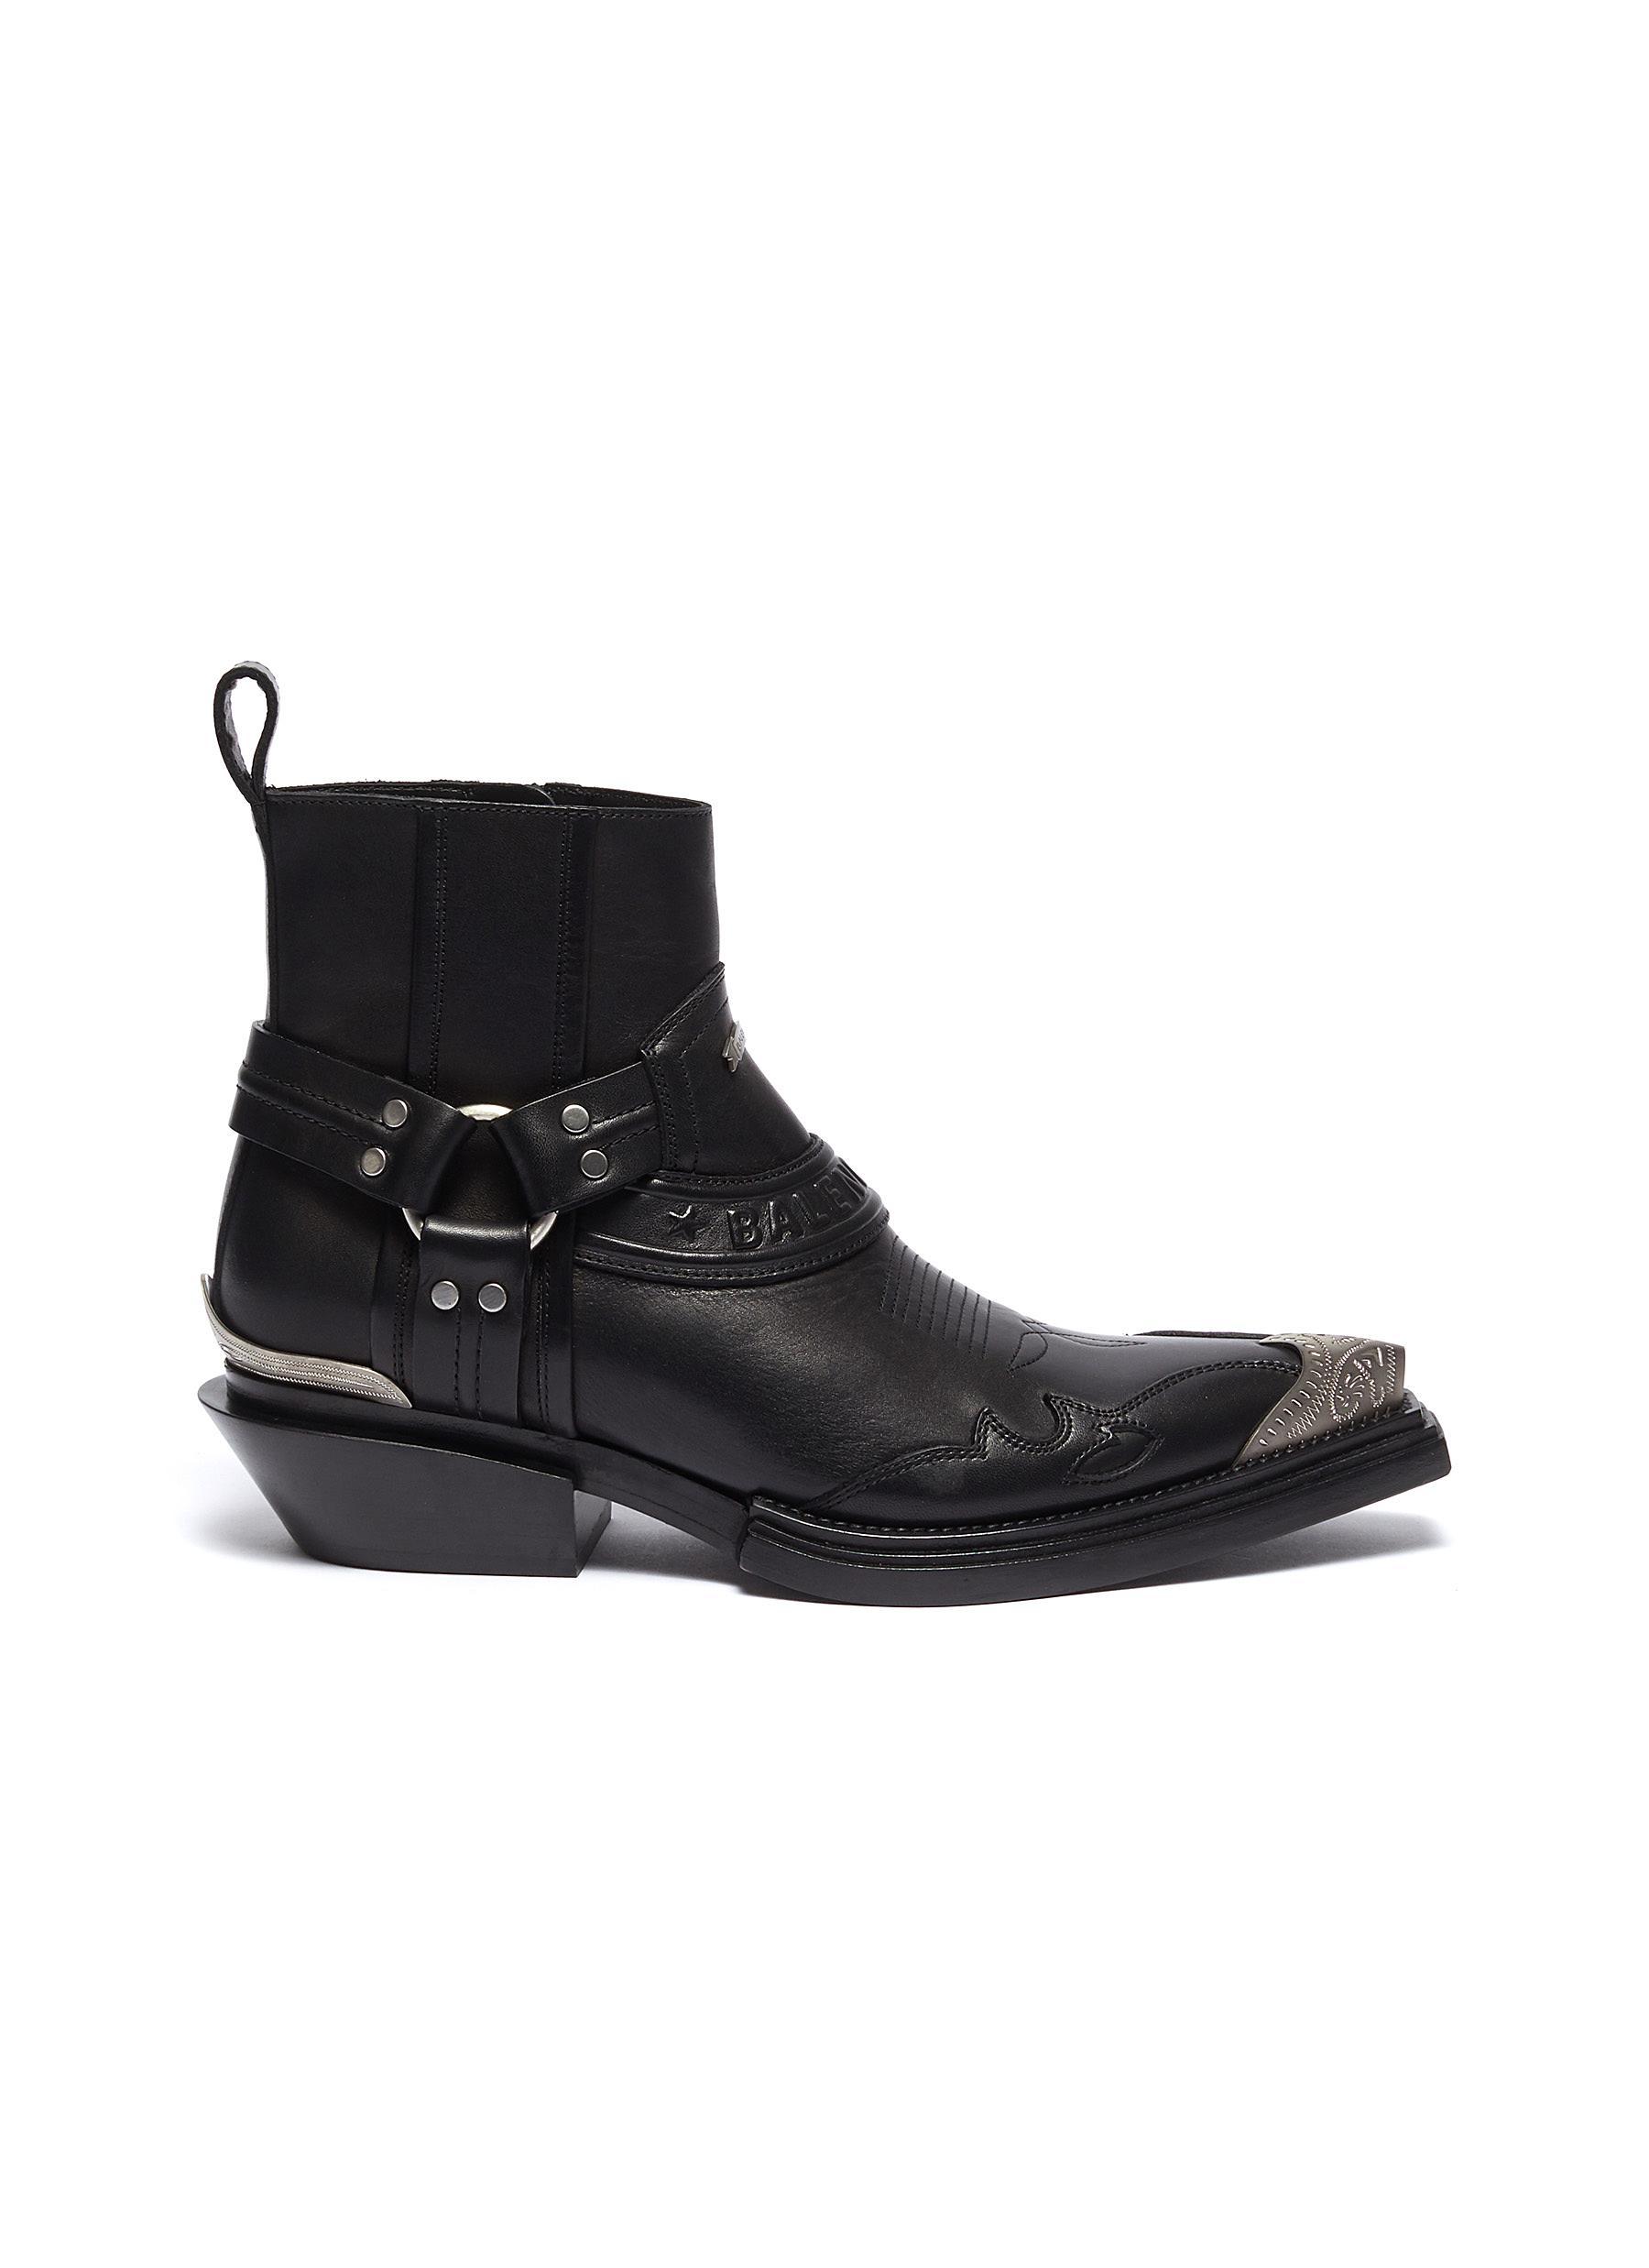 Balenciaga 'santiag' Metal Toe Cap Ankle Boots in Black | Lyst